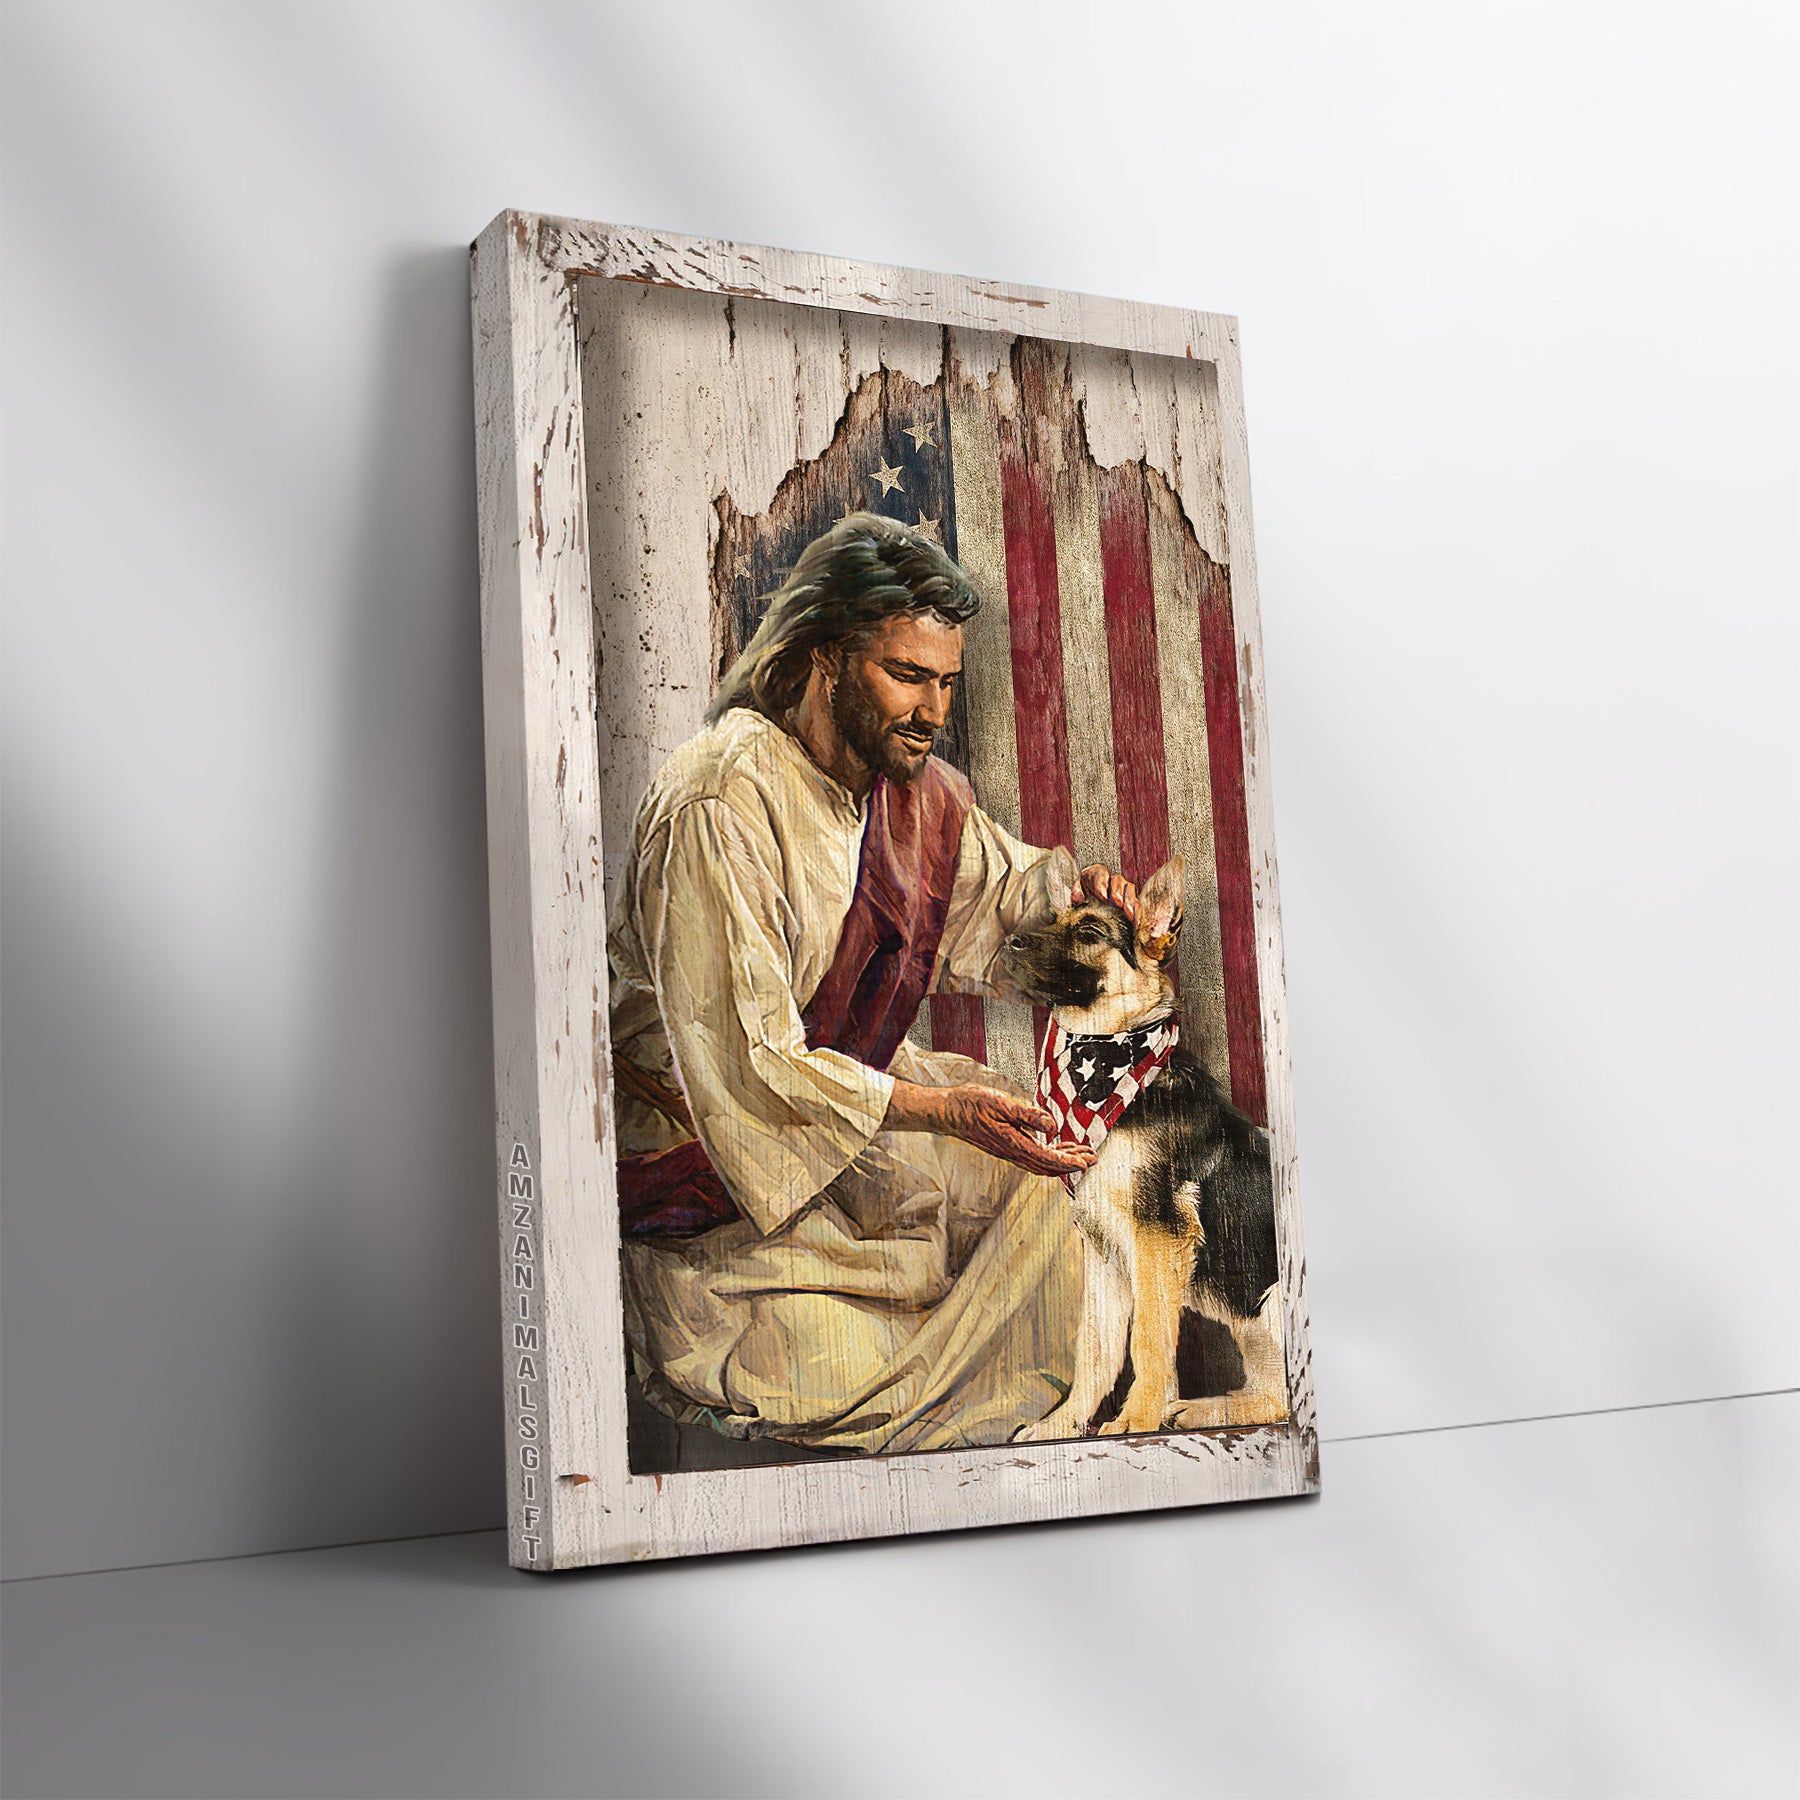 German Shepherd & Jesus Premium Wrapped Portrait Canvas - Unique Painting, Little German Shepherd, Antique US Flag - Gift For Christian, Dog Lovers